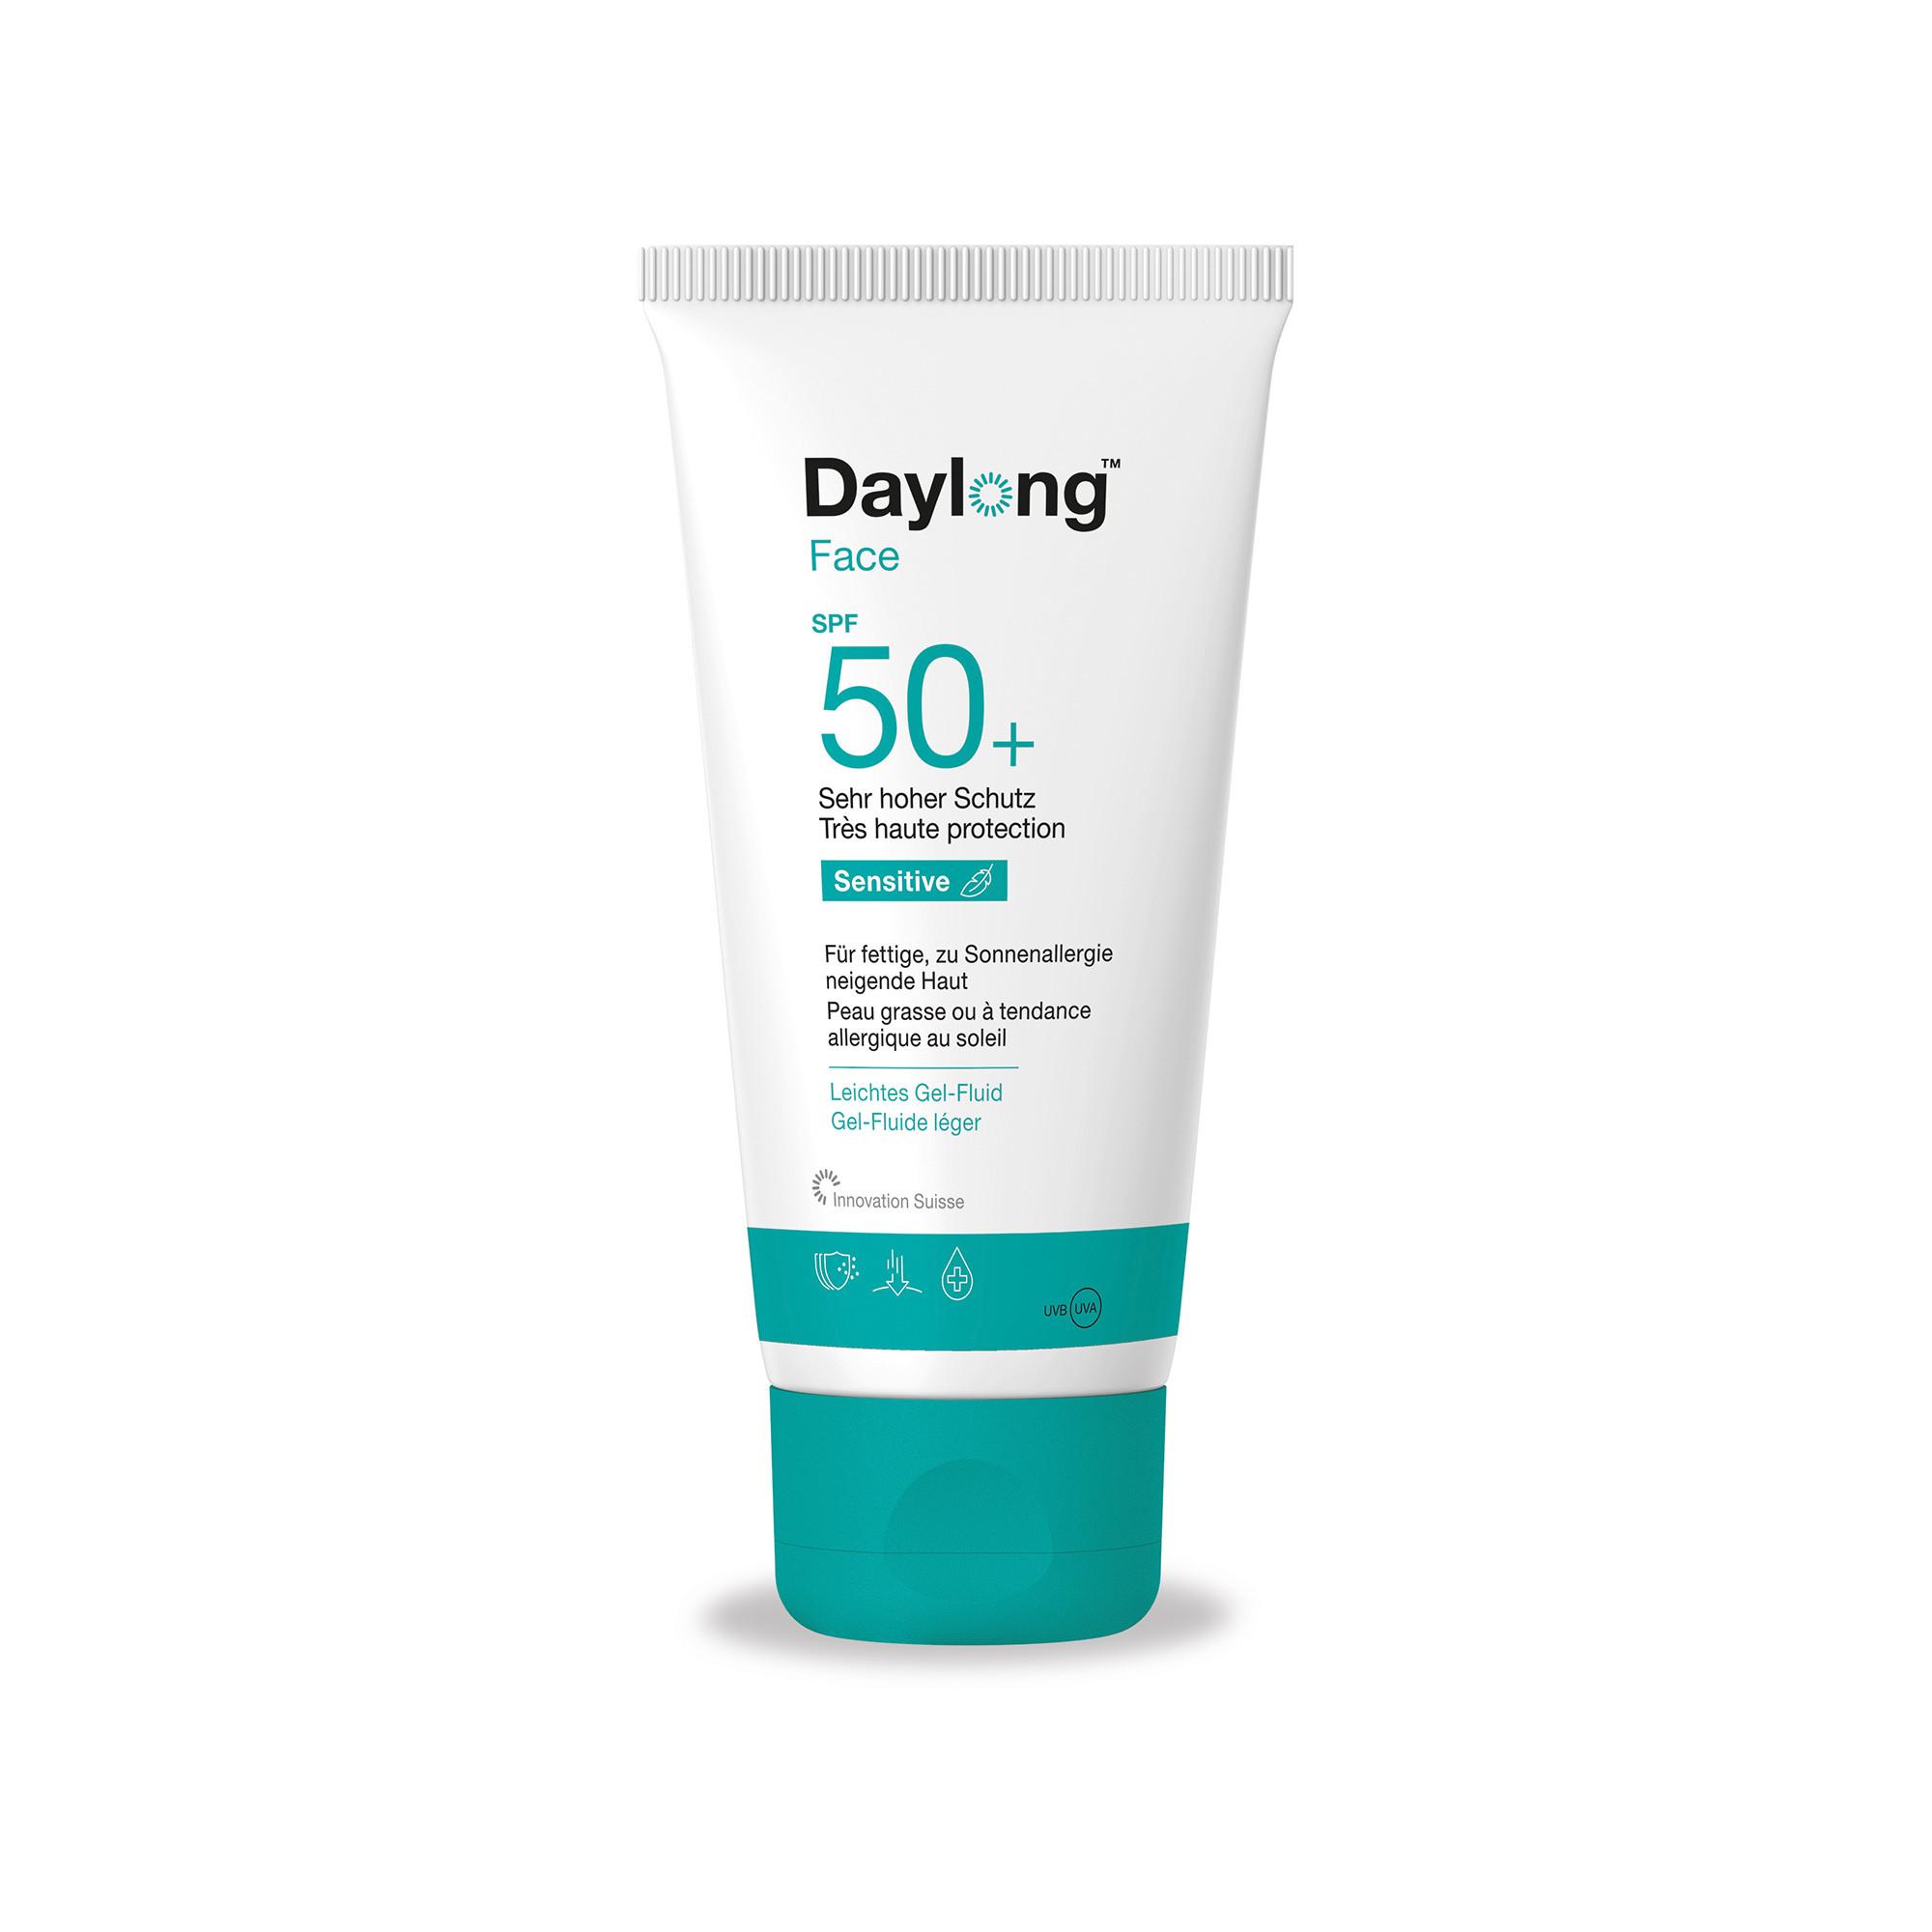 Daylong  Face Sensitive Gelfluid SPF 50+ 